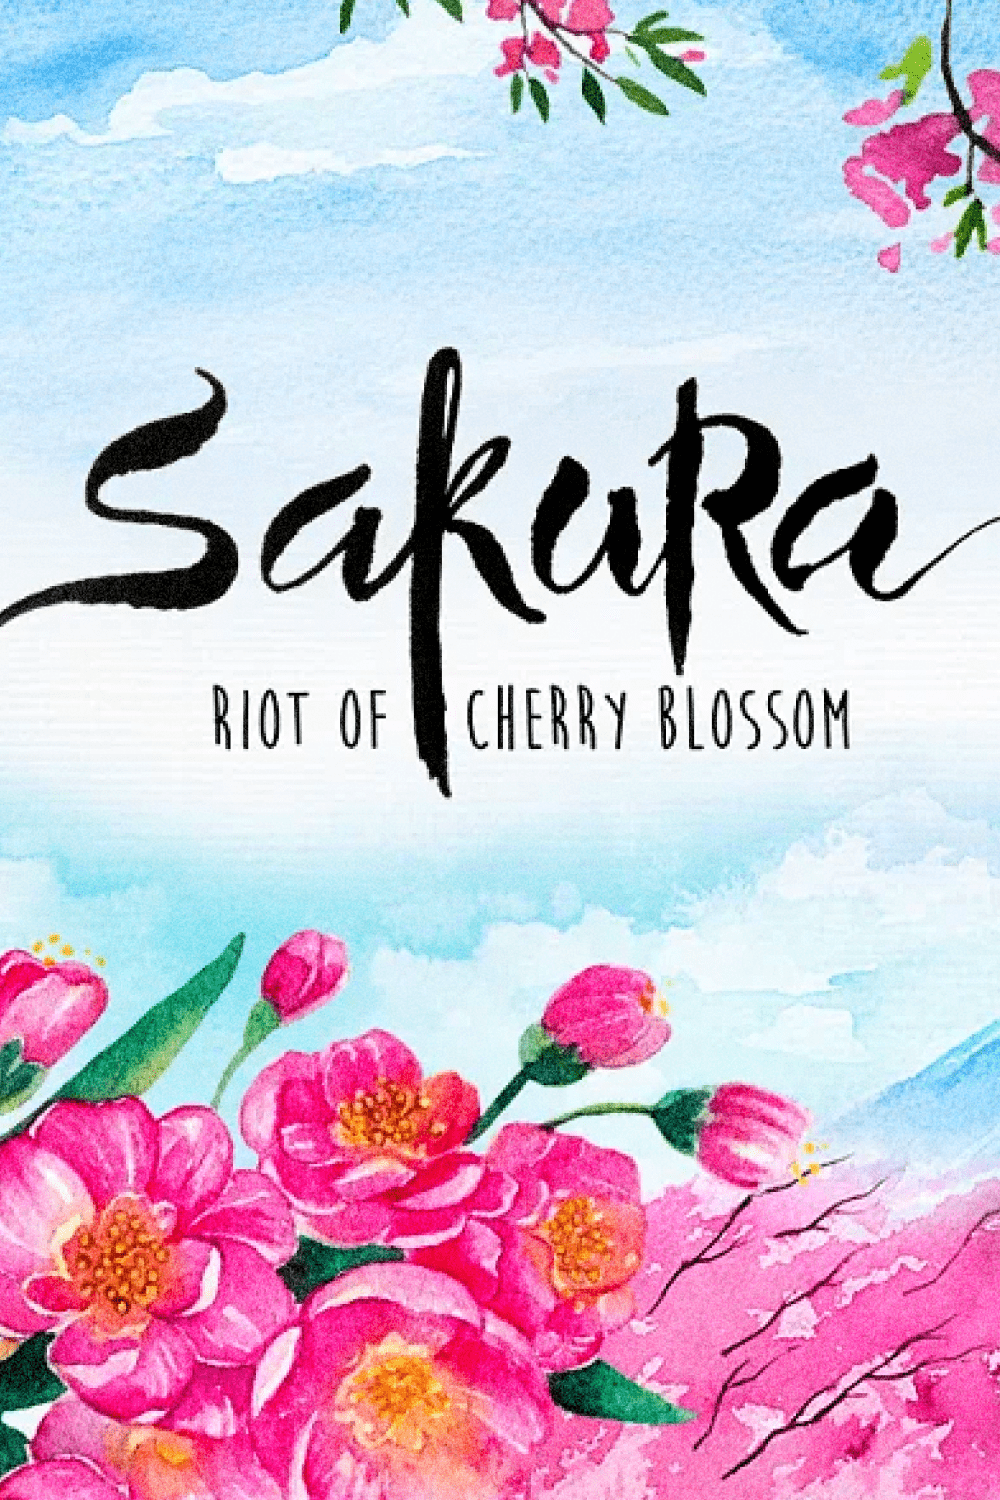 Sakura. riot of cherry blossom - pinterest image preview.